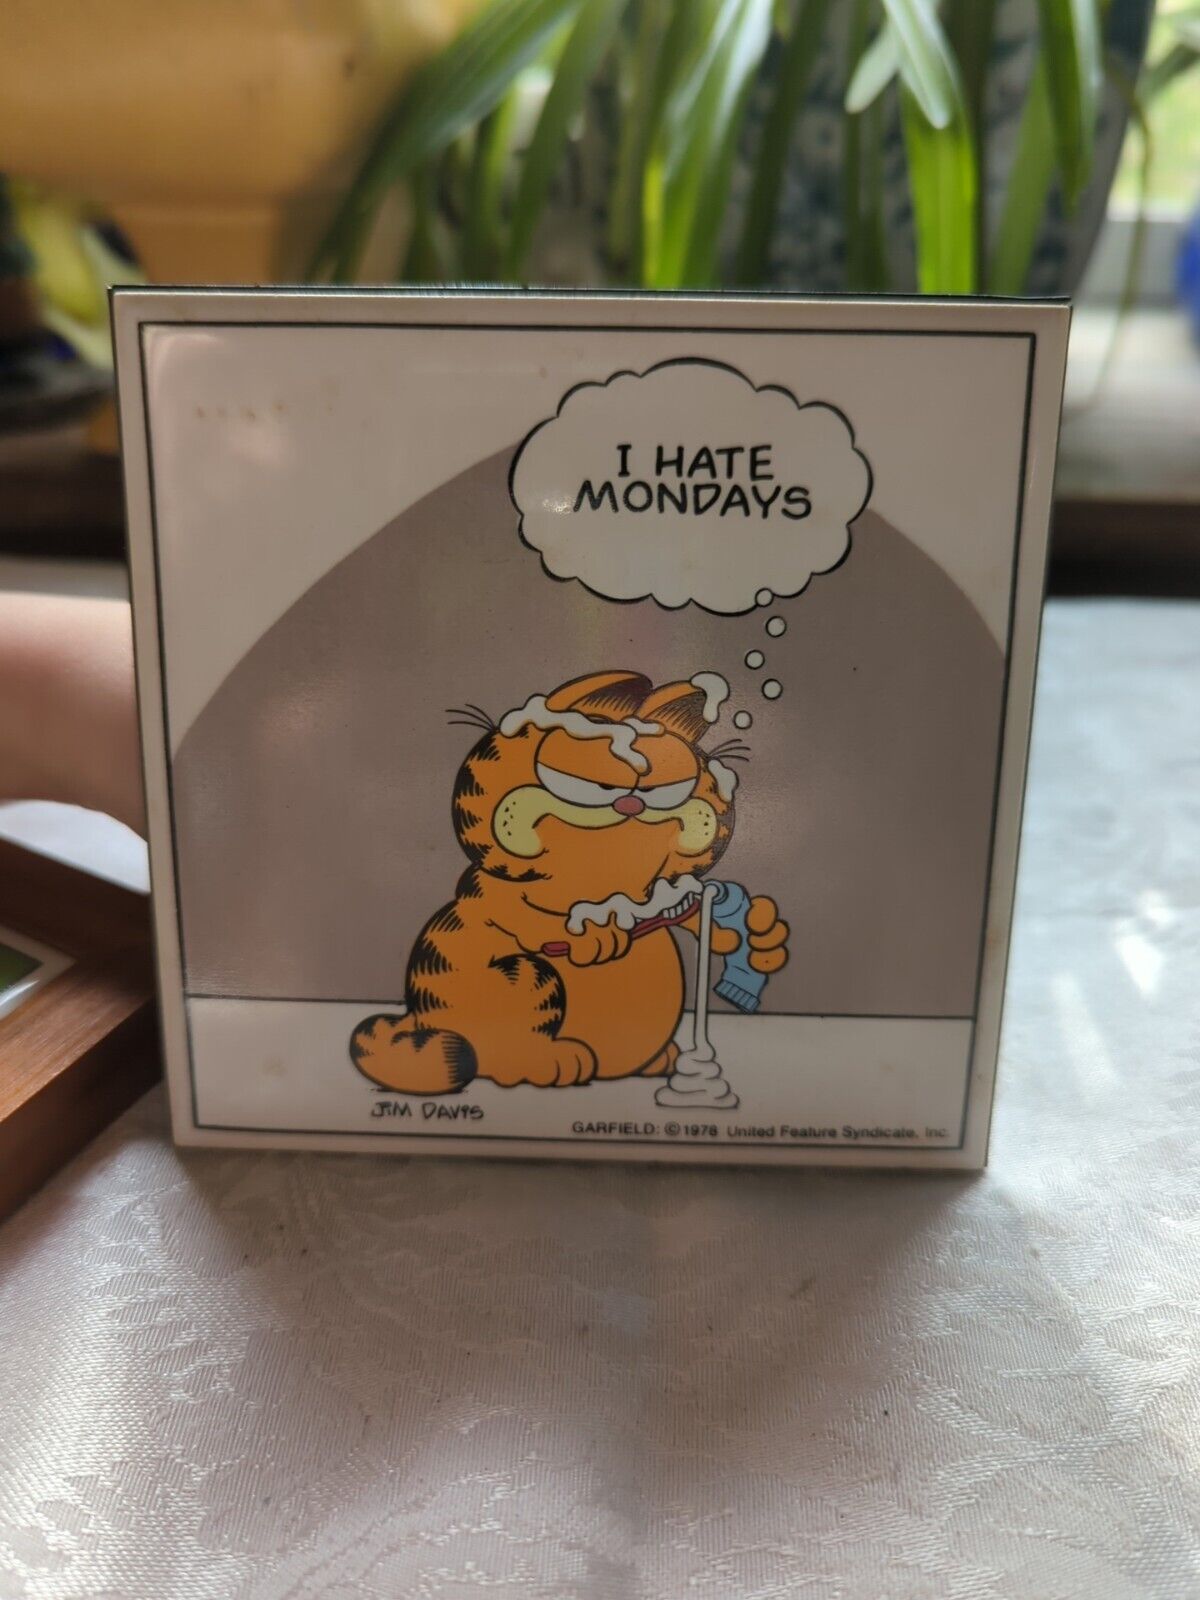 Vintage Garfield I Hate Mondays Tile Desk Picture 1978